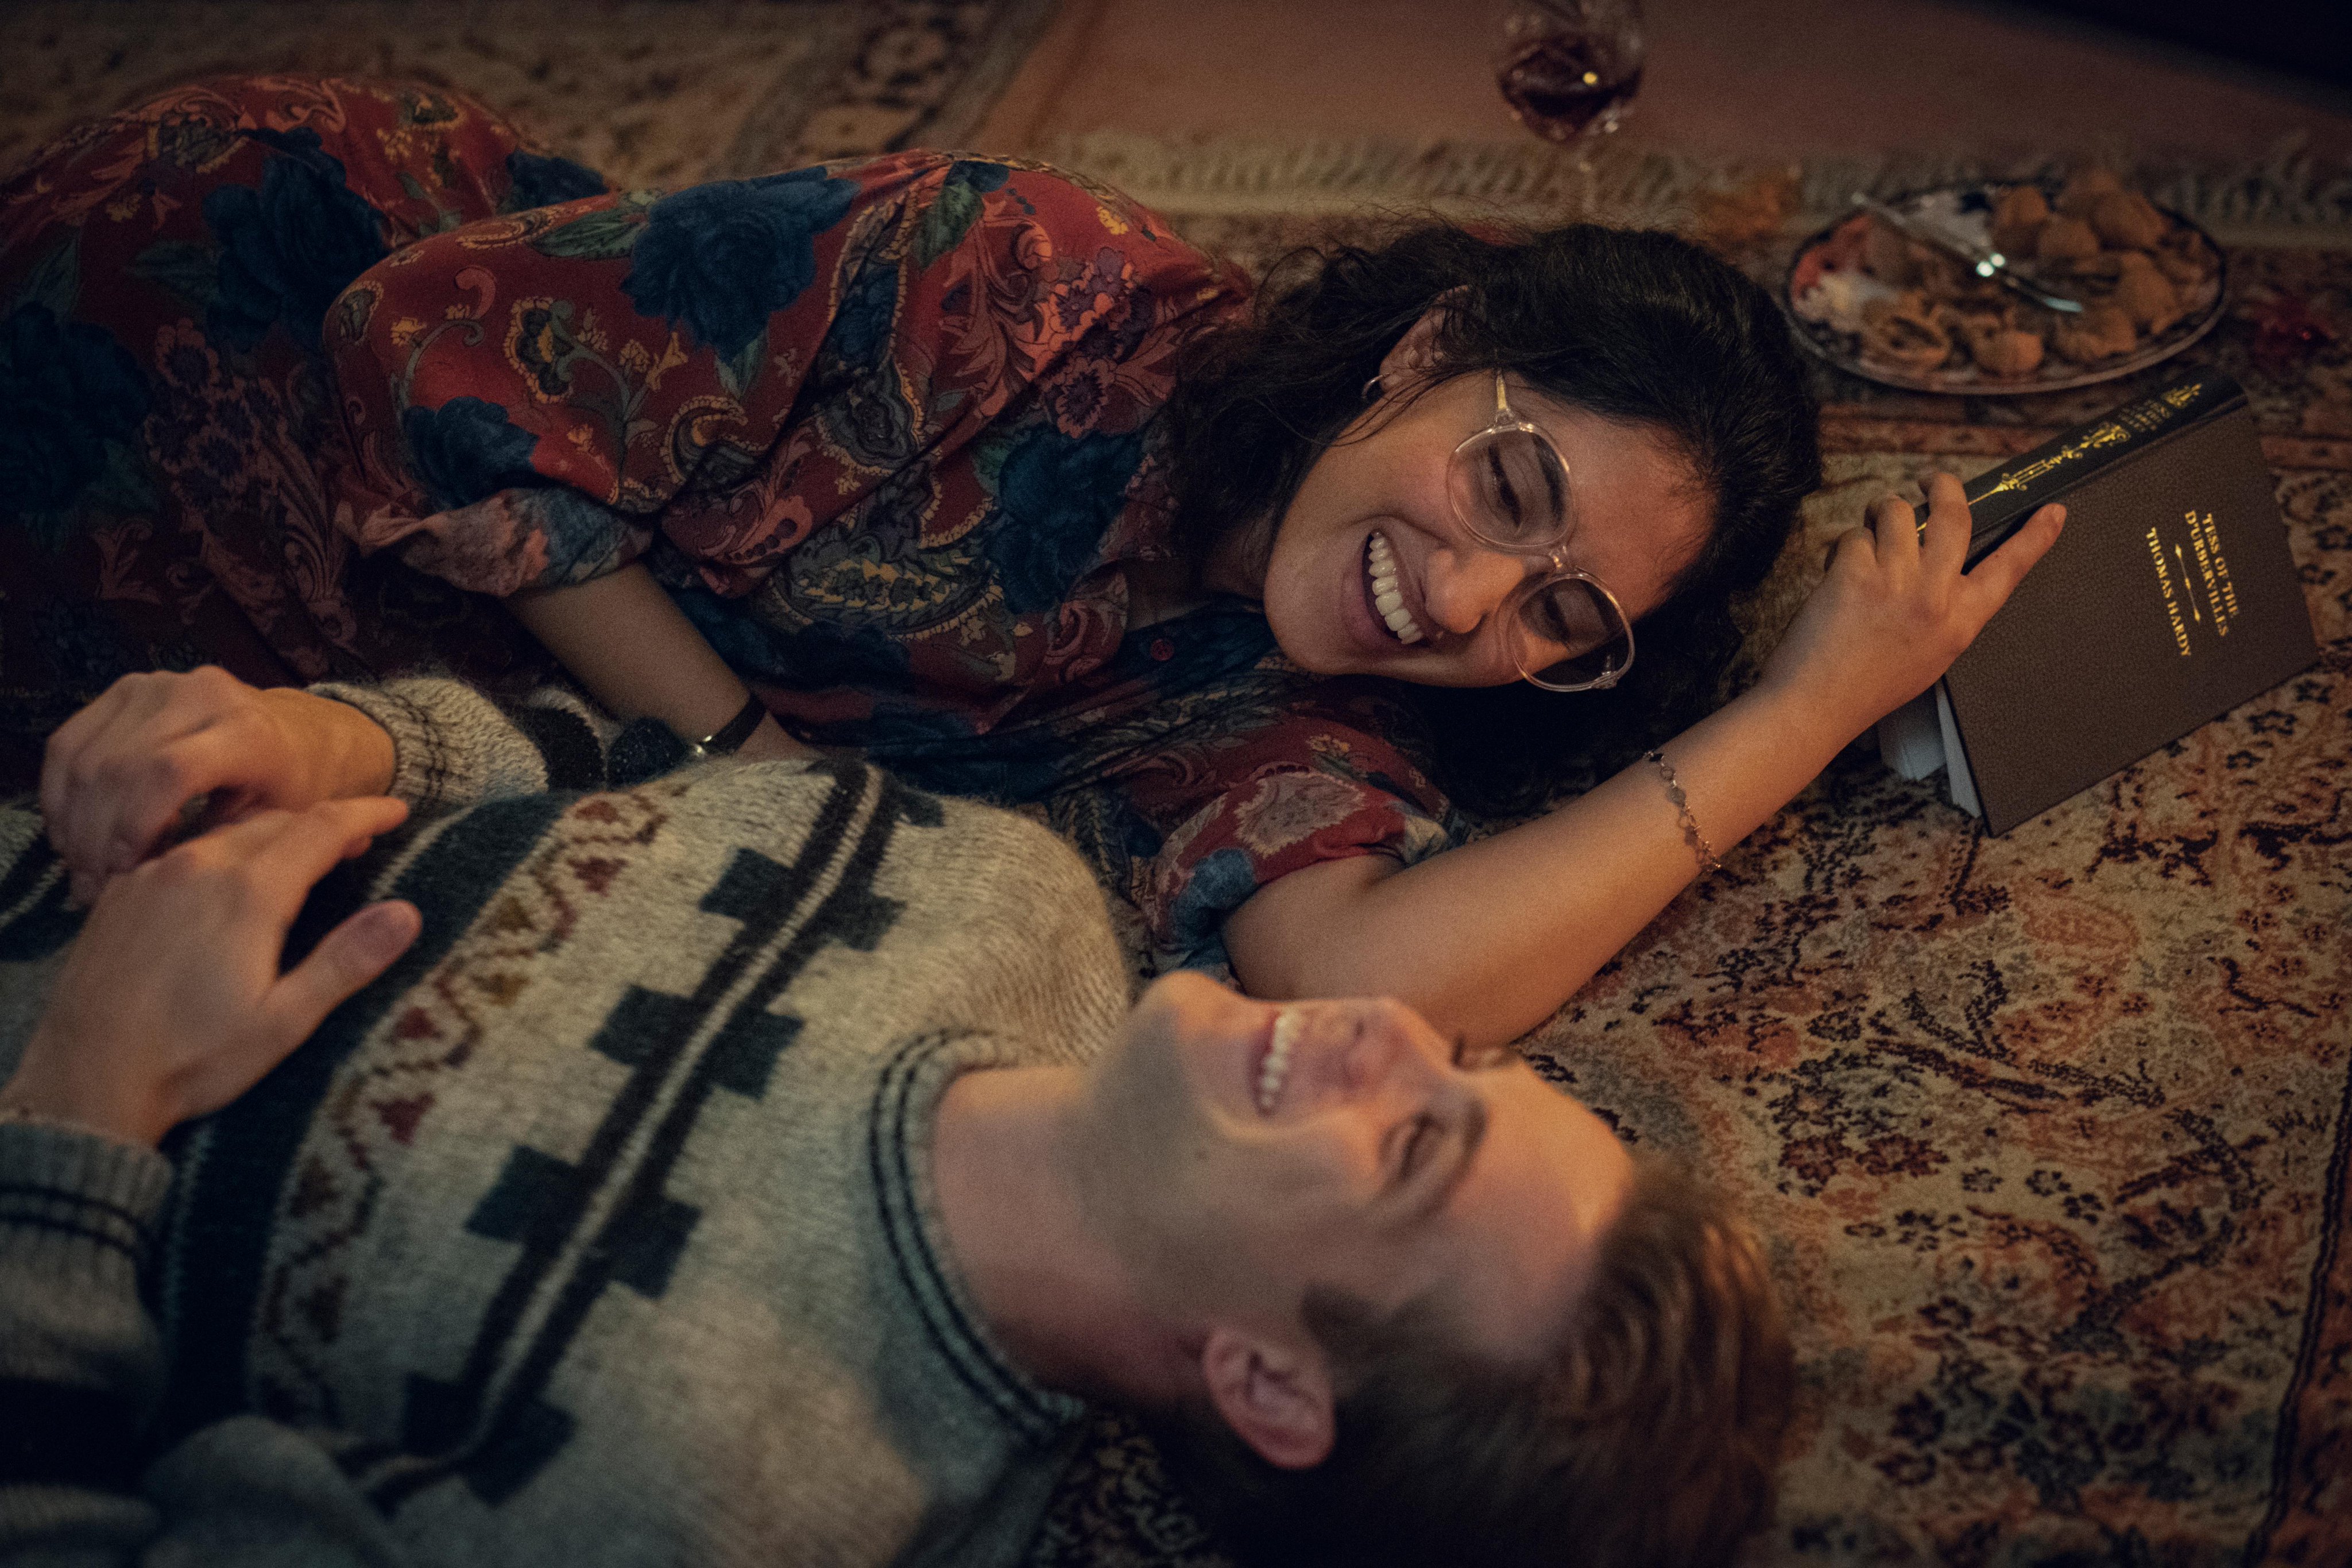 The new Netflix series stars Ambika Mod as Emma and Leo Woodall as Dexter.